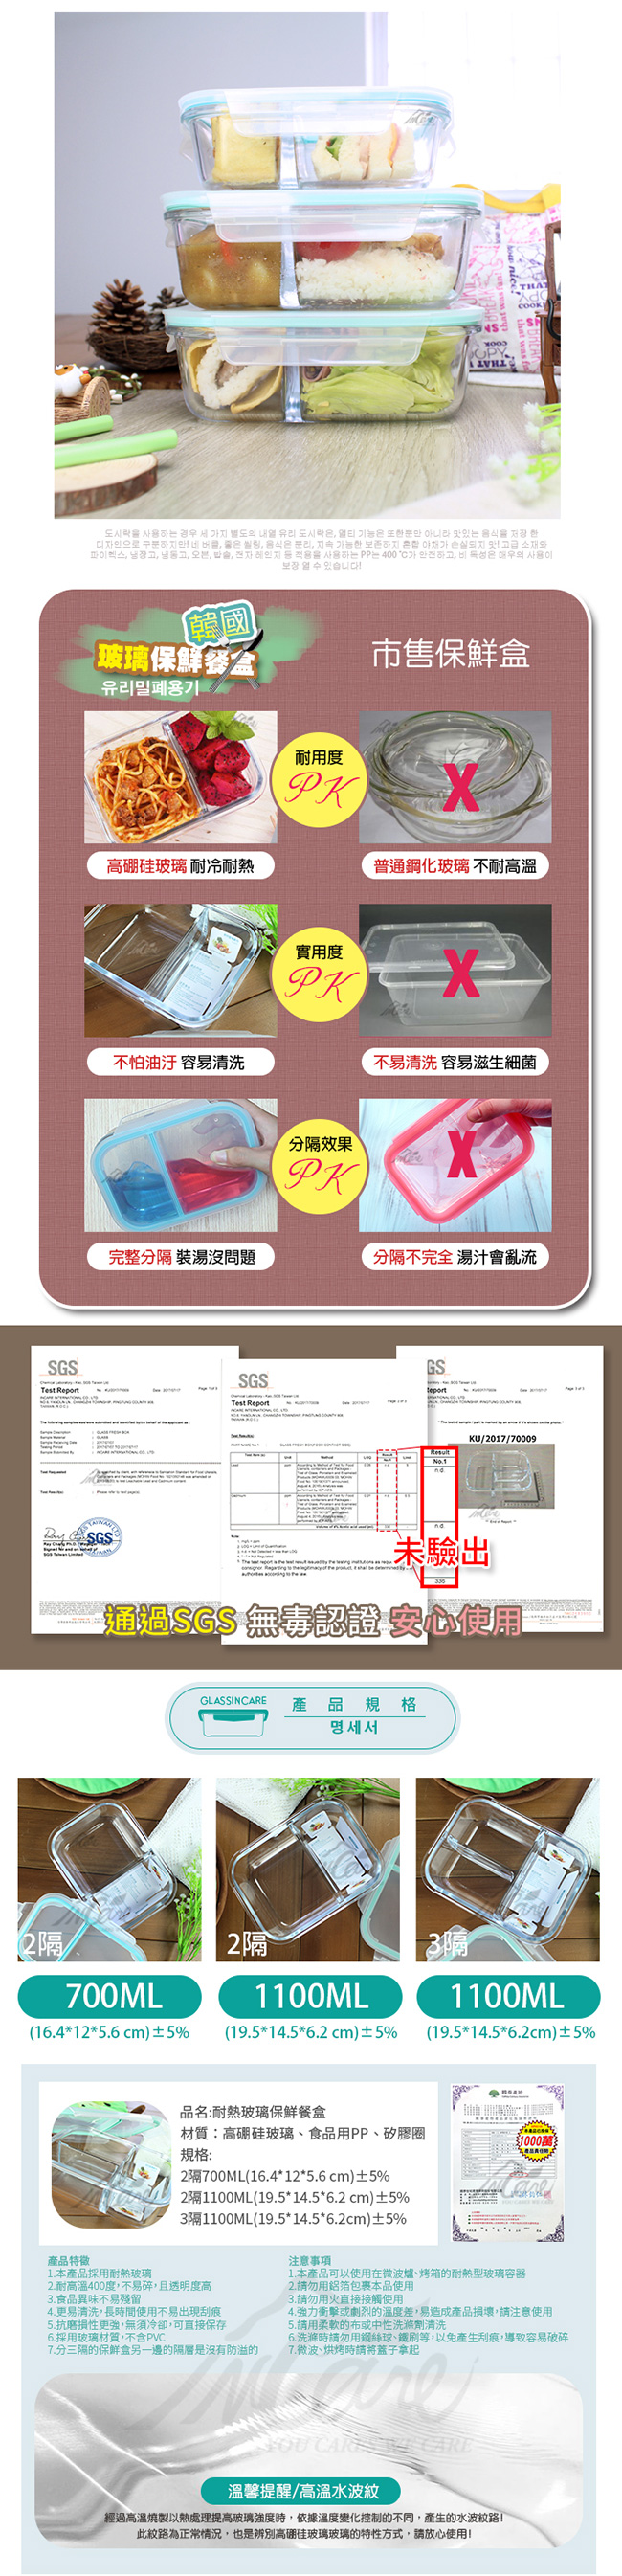 Incare 熱銷韓國強化玻璃分隔保鮮盒(700ml2隔*2+1100ml3隔*1)